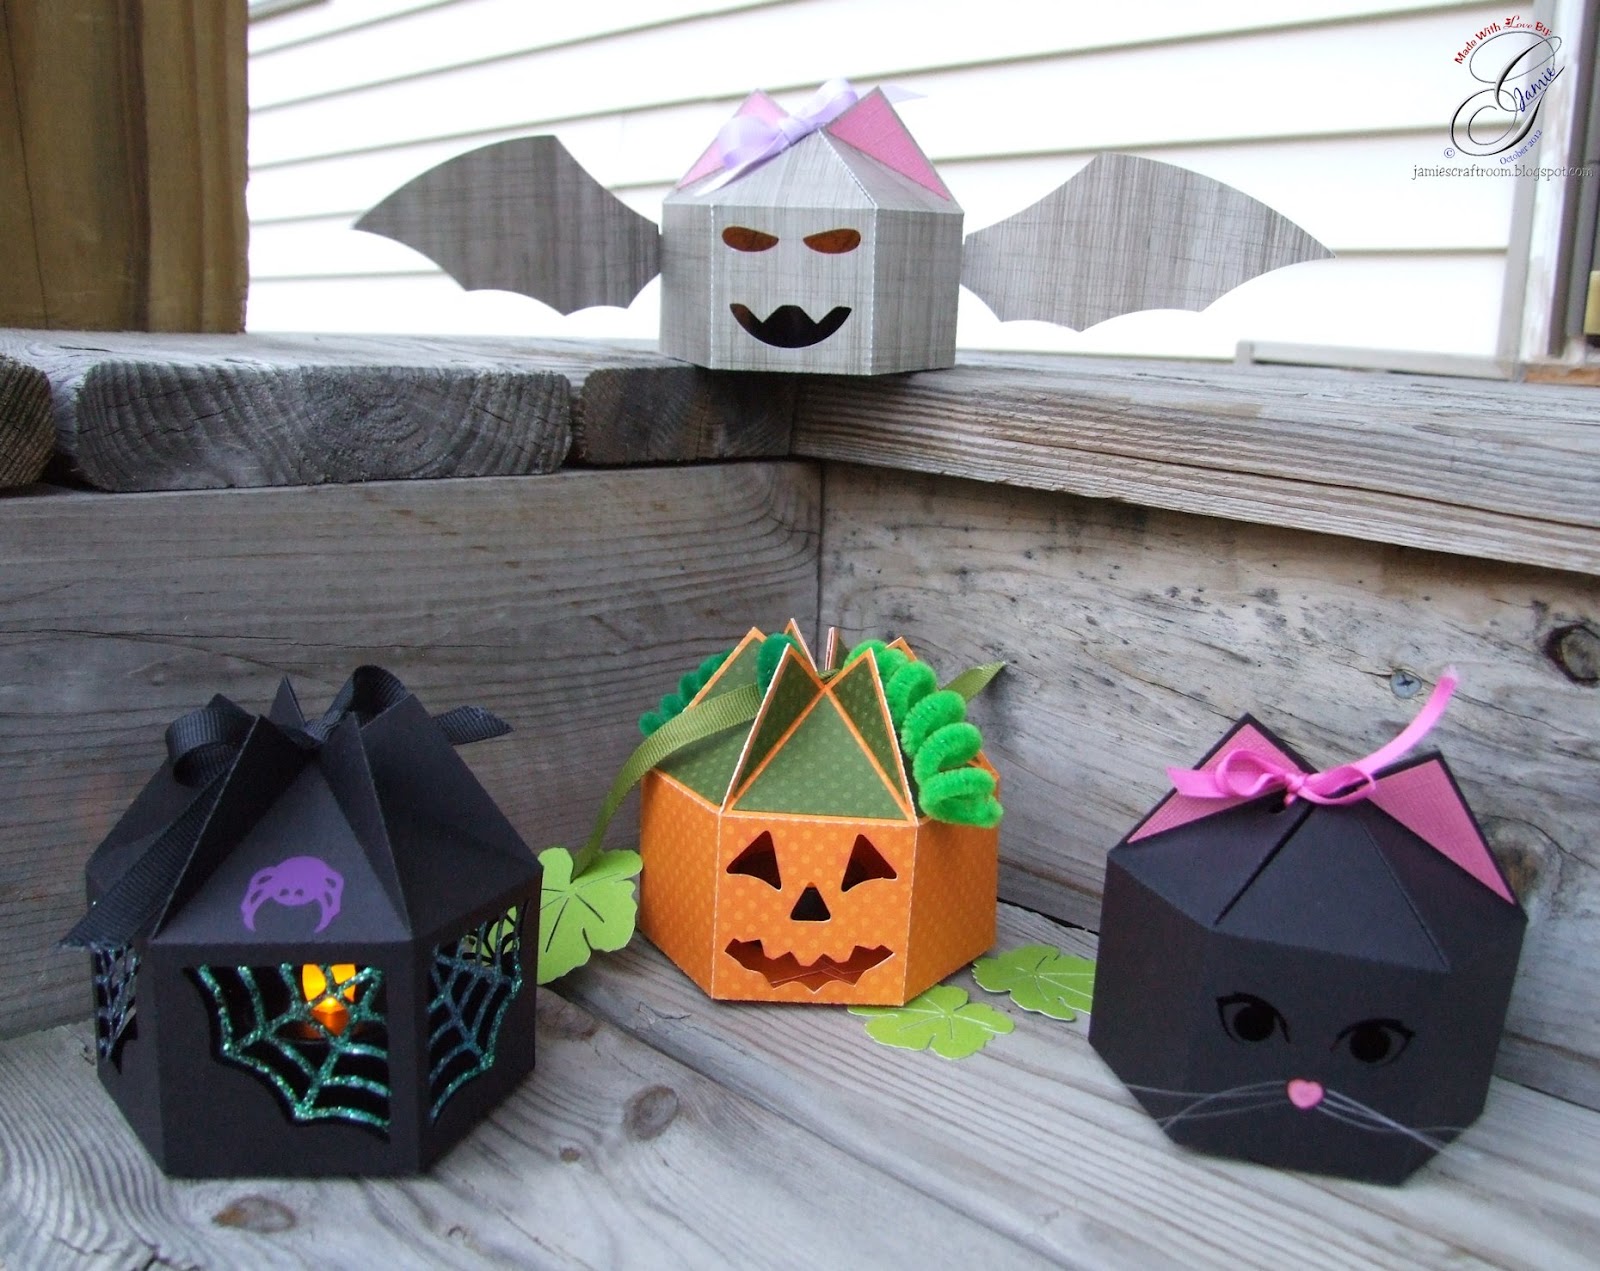 Jamie's Craft Room: Halloween Boxes